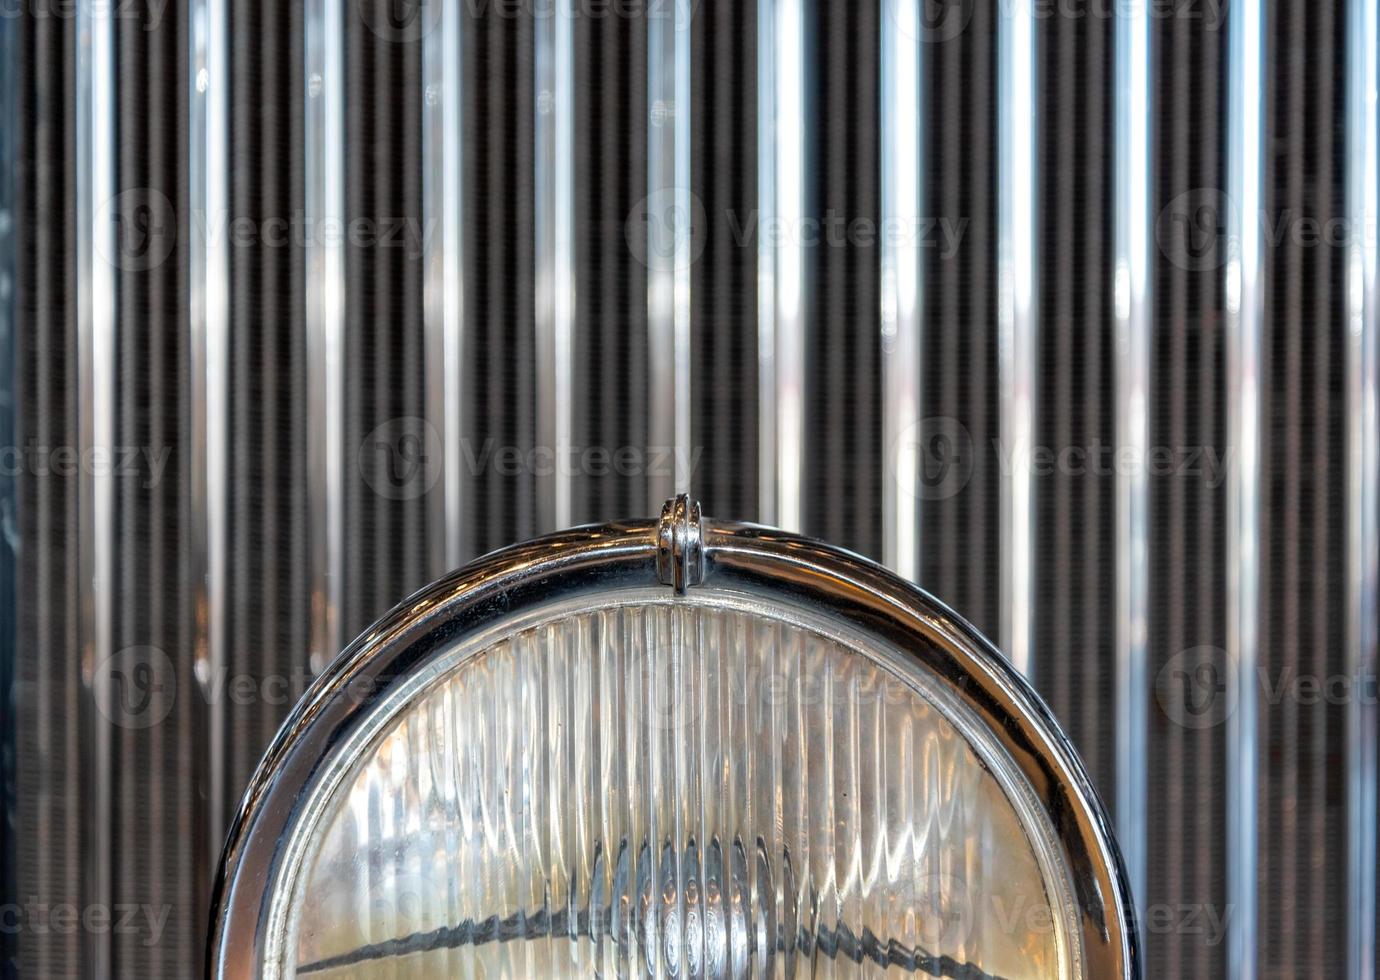 radiator traliewerk en koplamp van retro auto foto